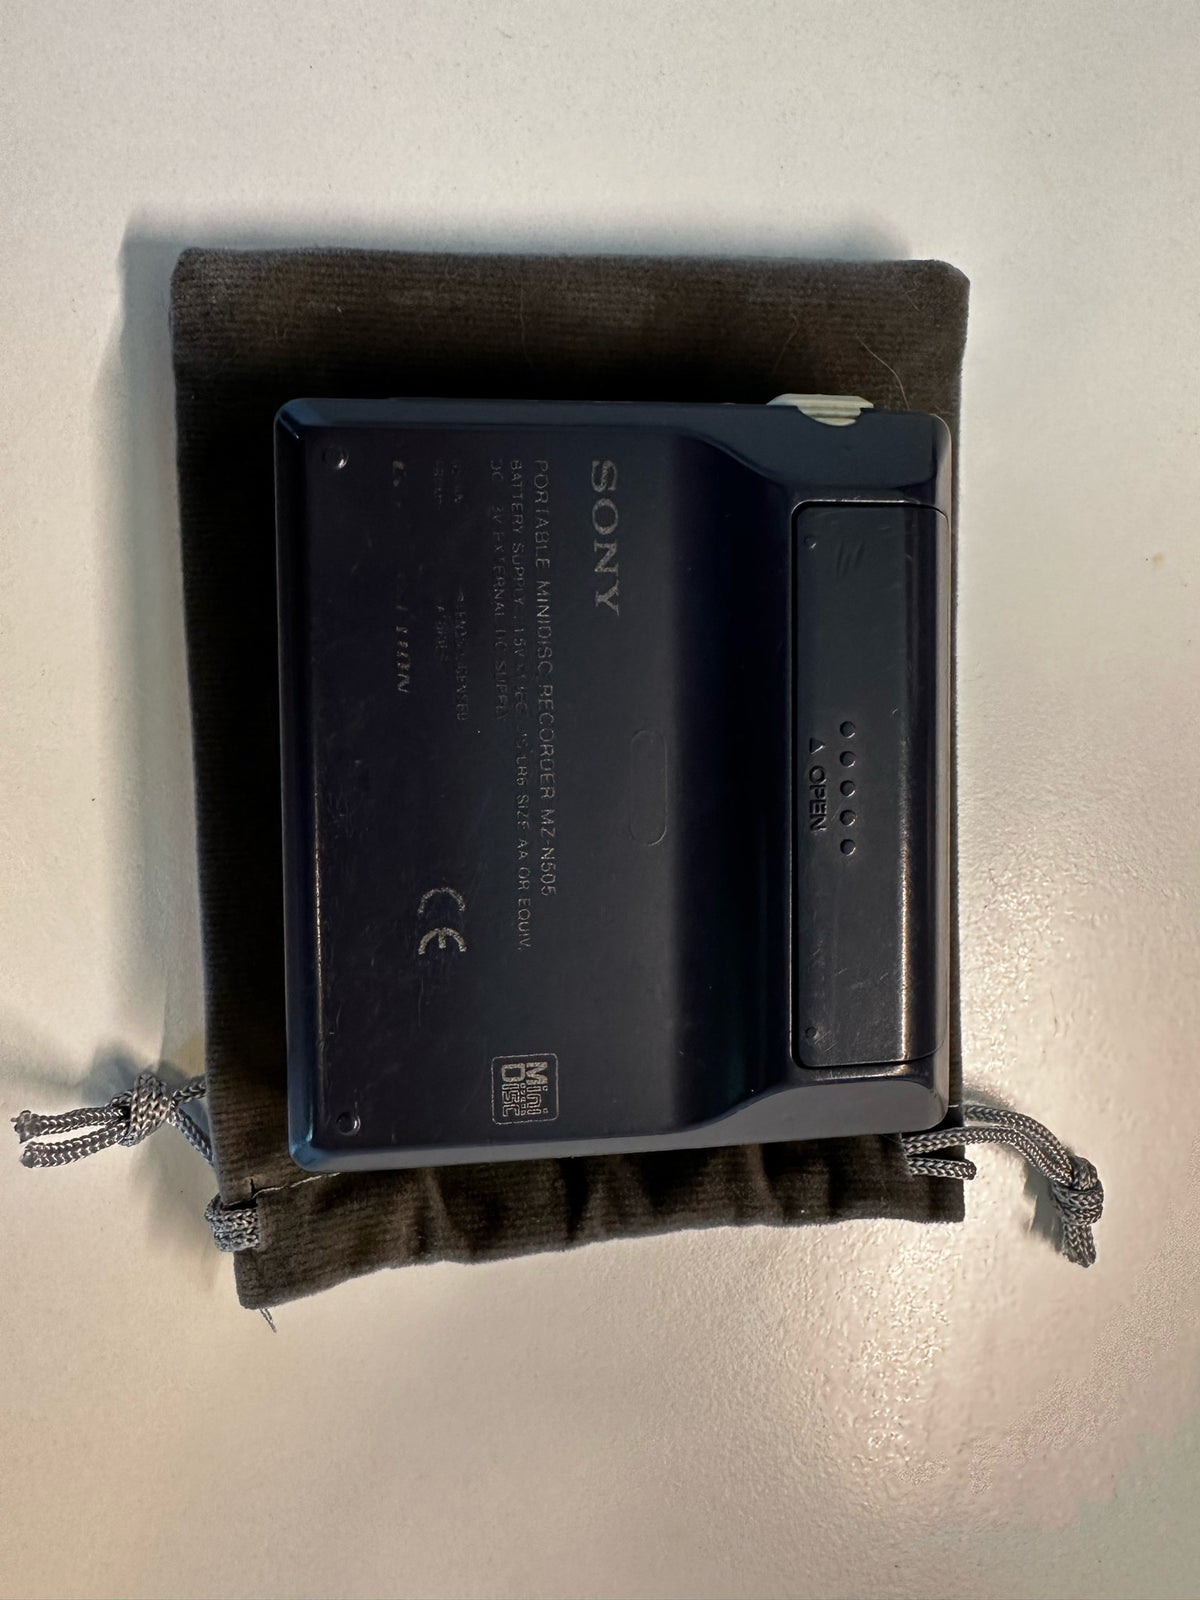 Minidisc afspiller, Sony, MZ-N505